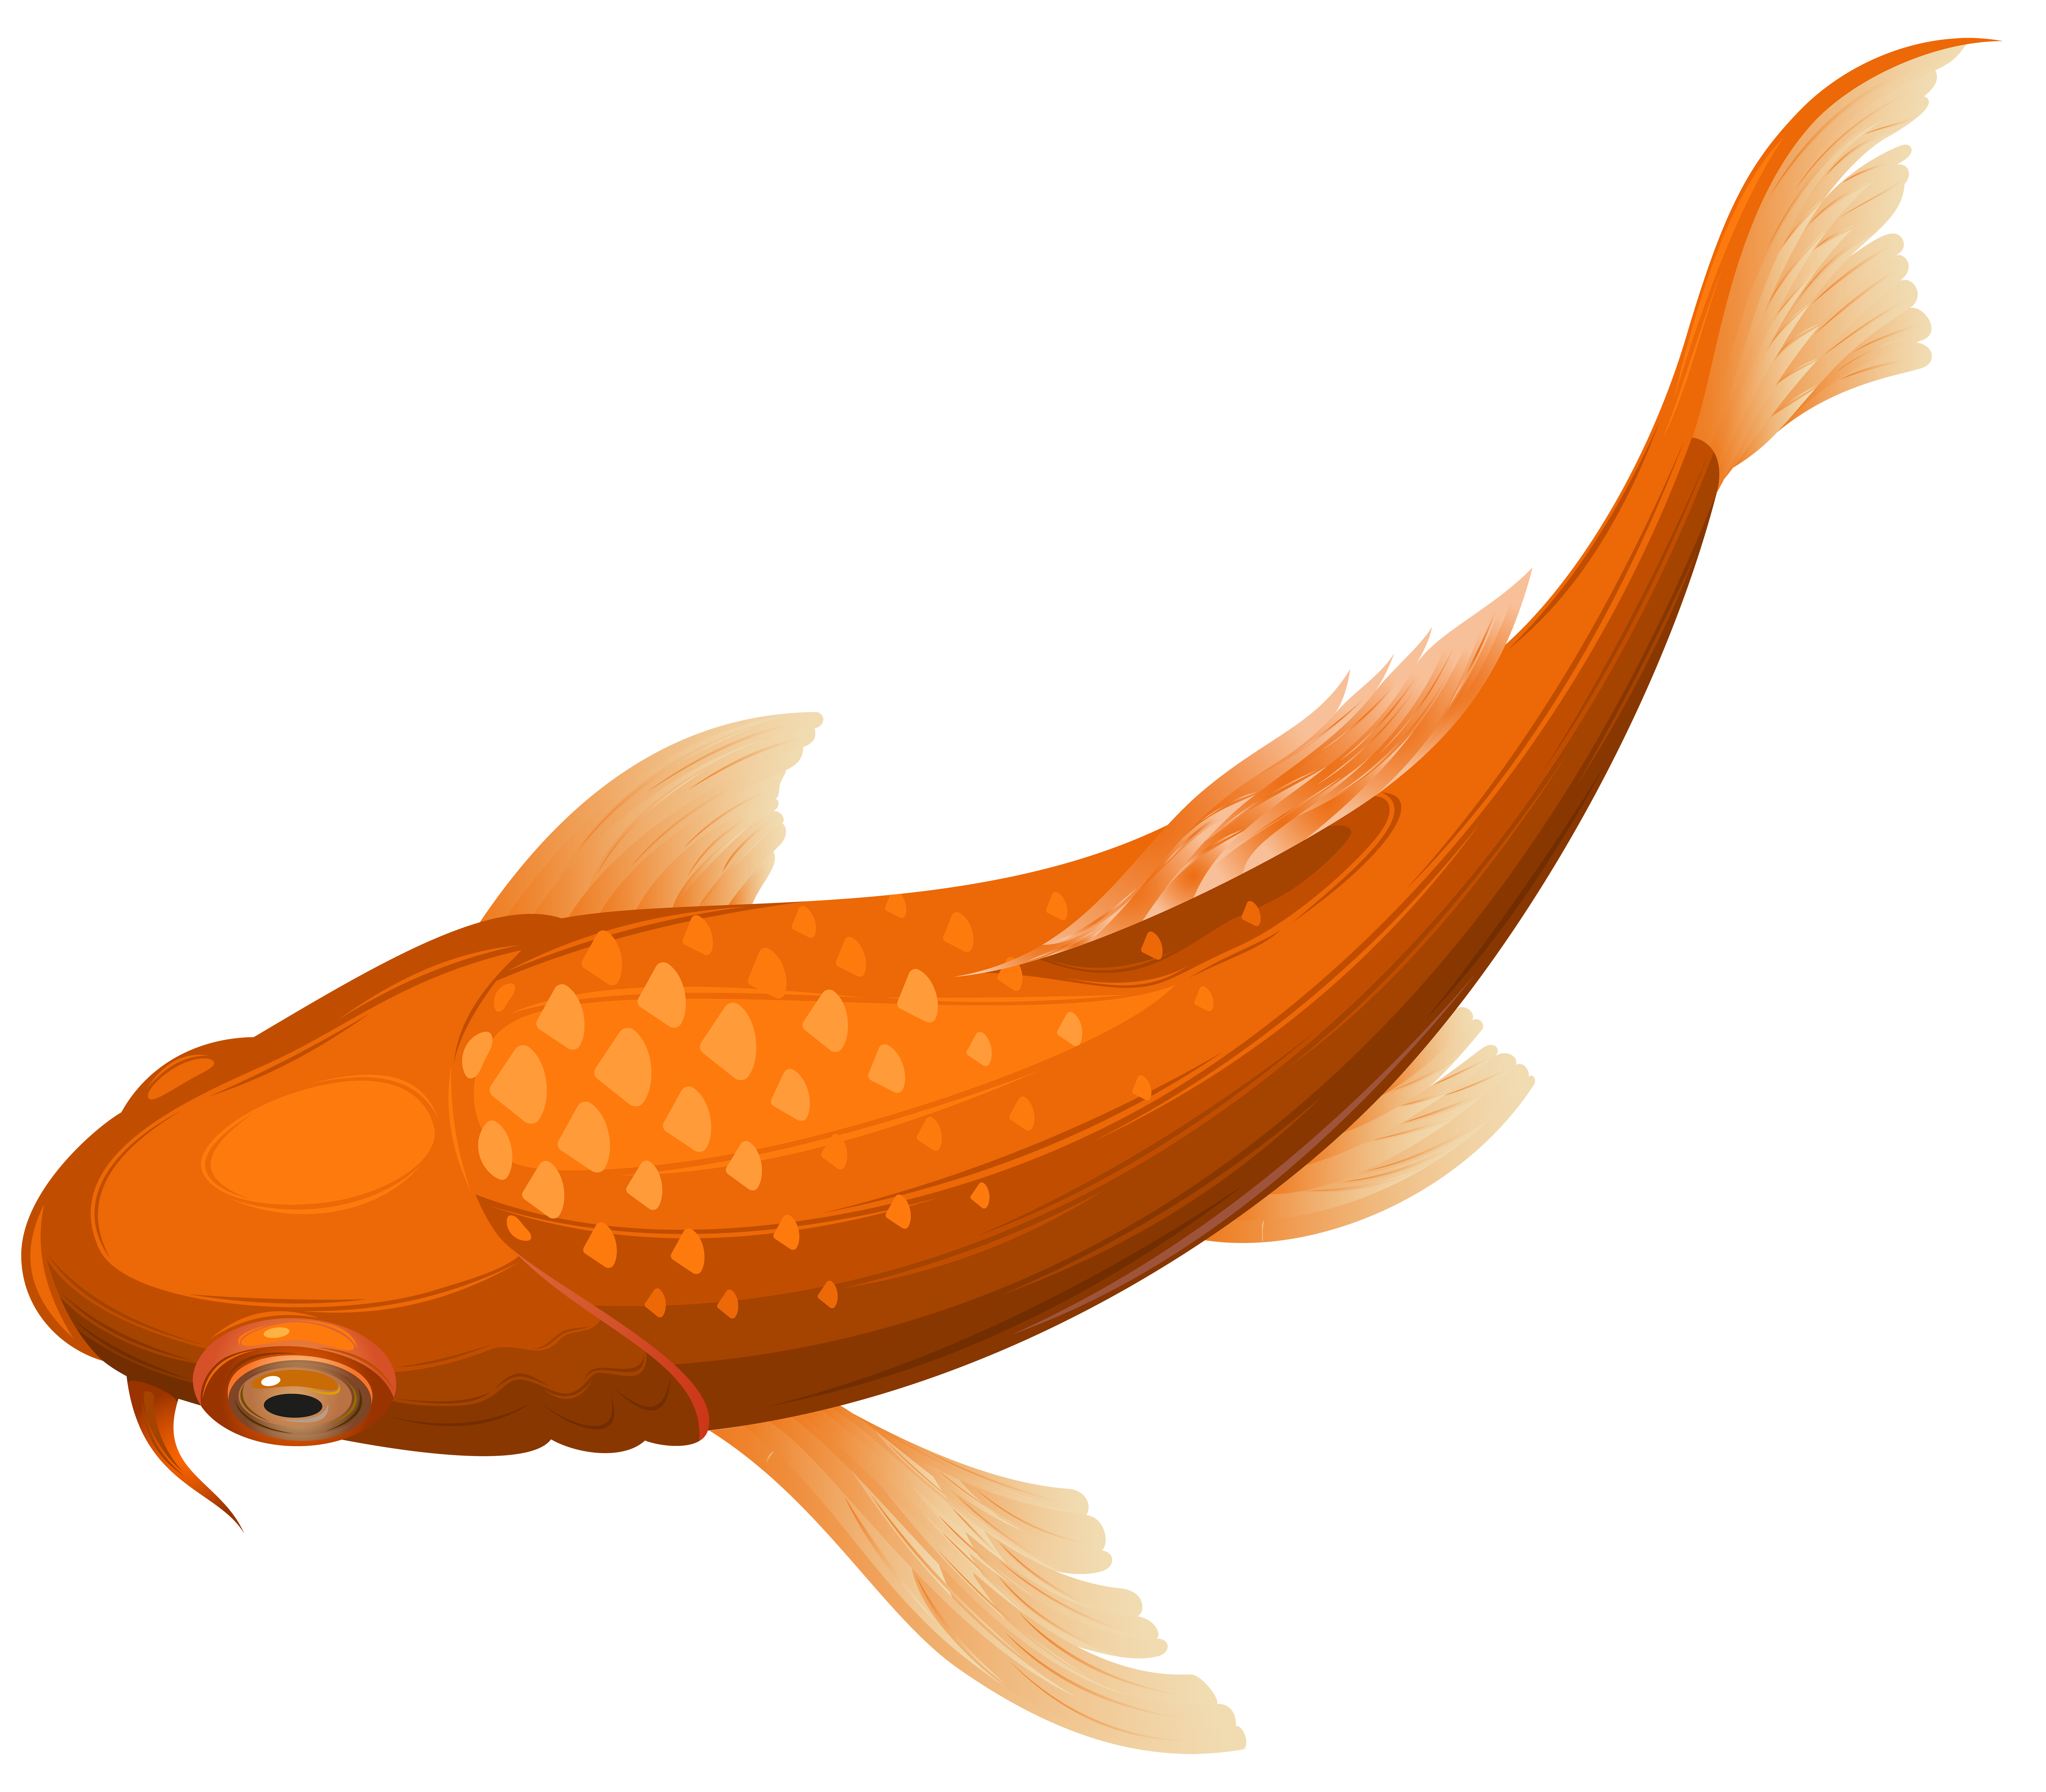 Orange Koi Fish Transparent Clip Art PNG Image